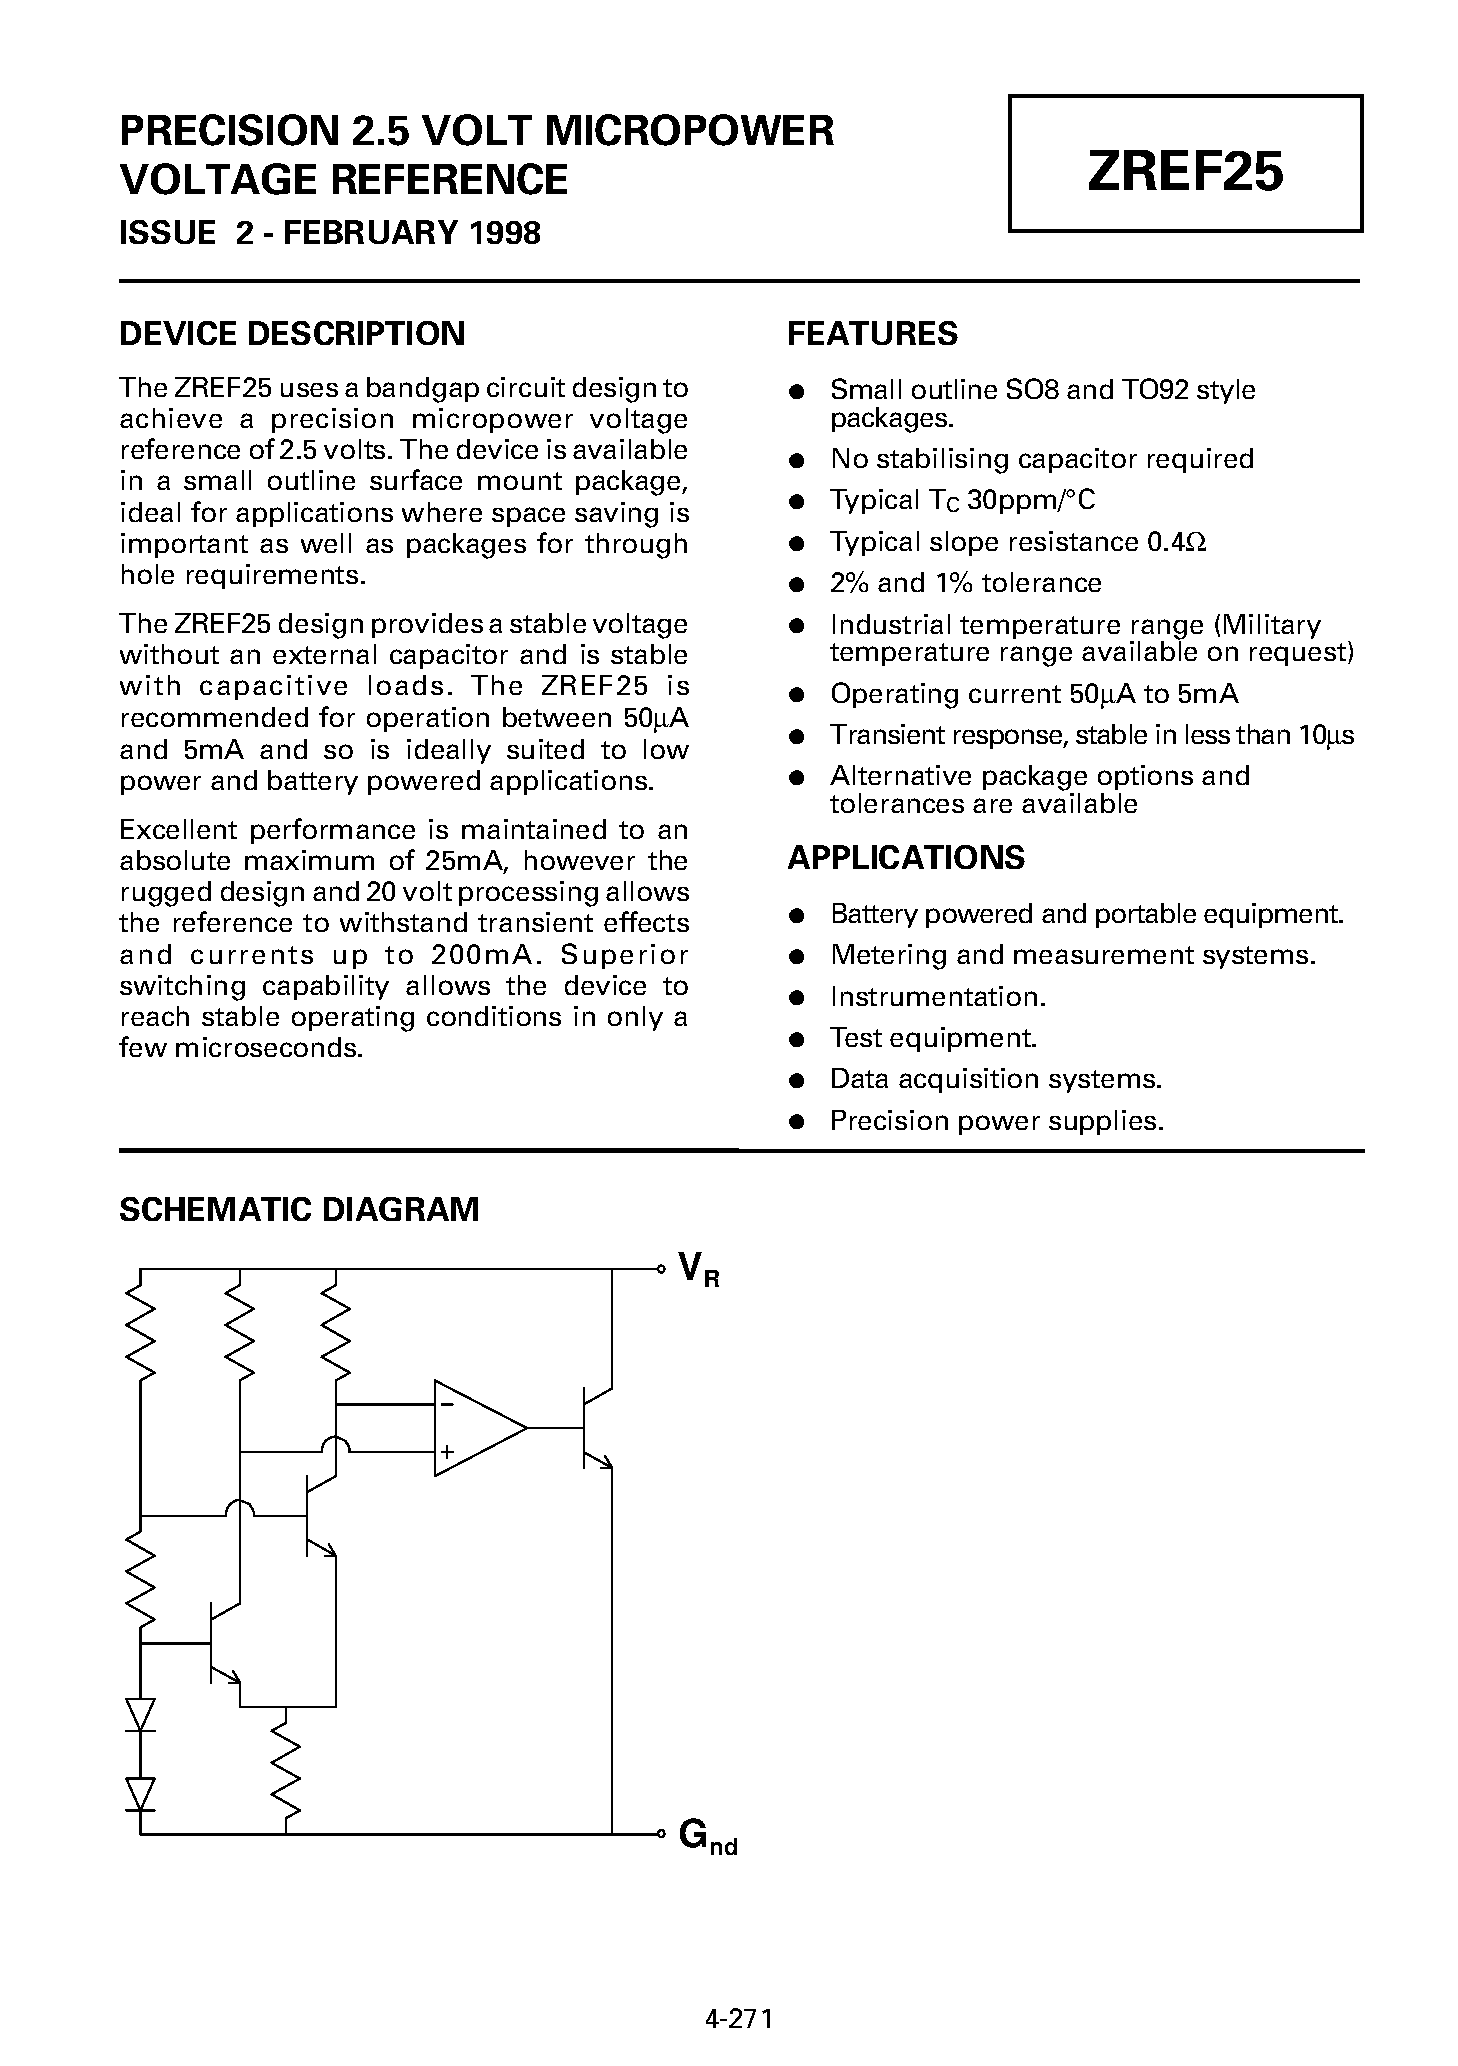 Datasheet ZREF25 - PRECISION 2.5 VOLT MICROPOWER VOLTAGE REFERENCE page 1